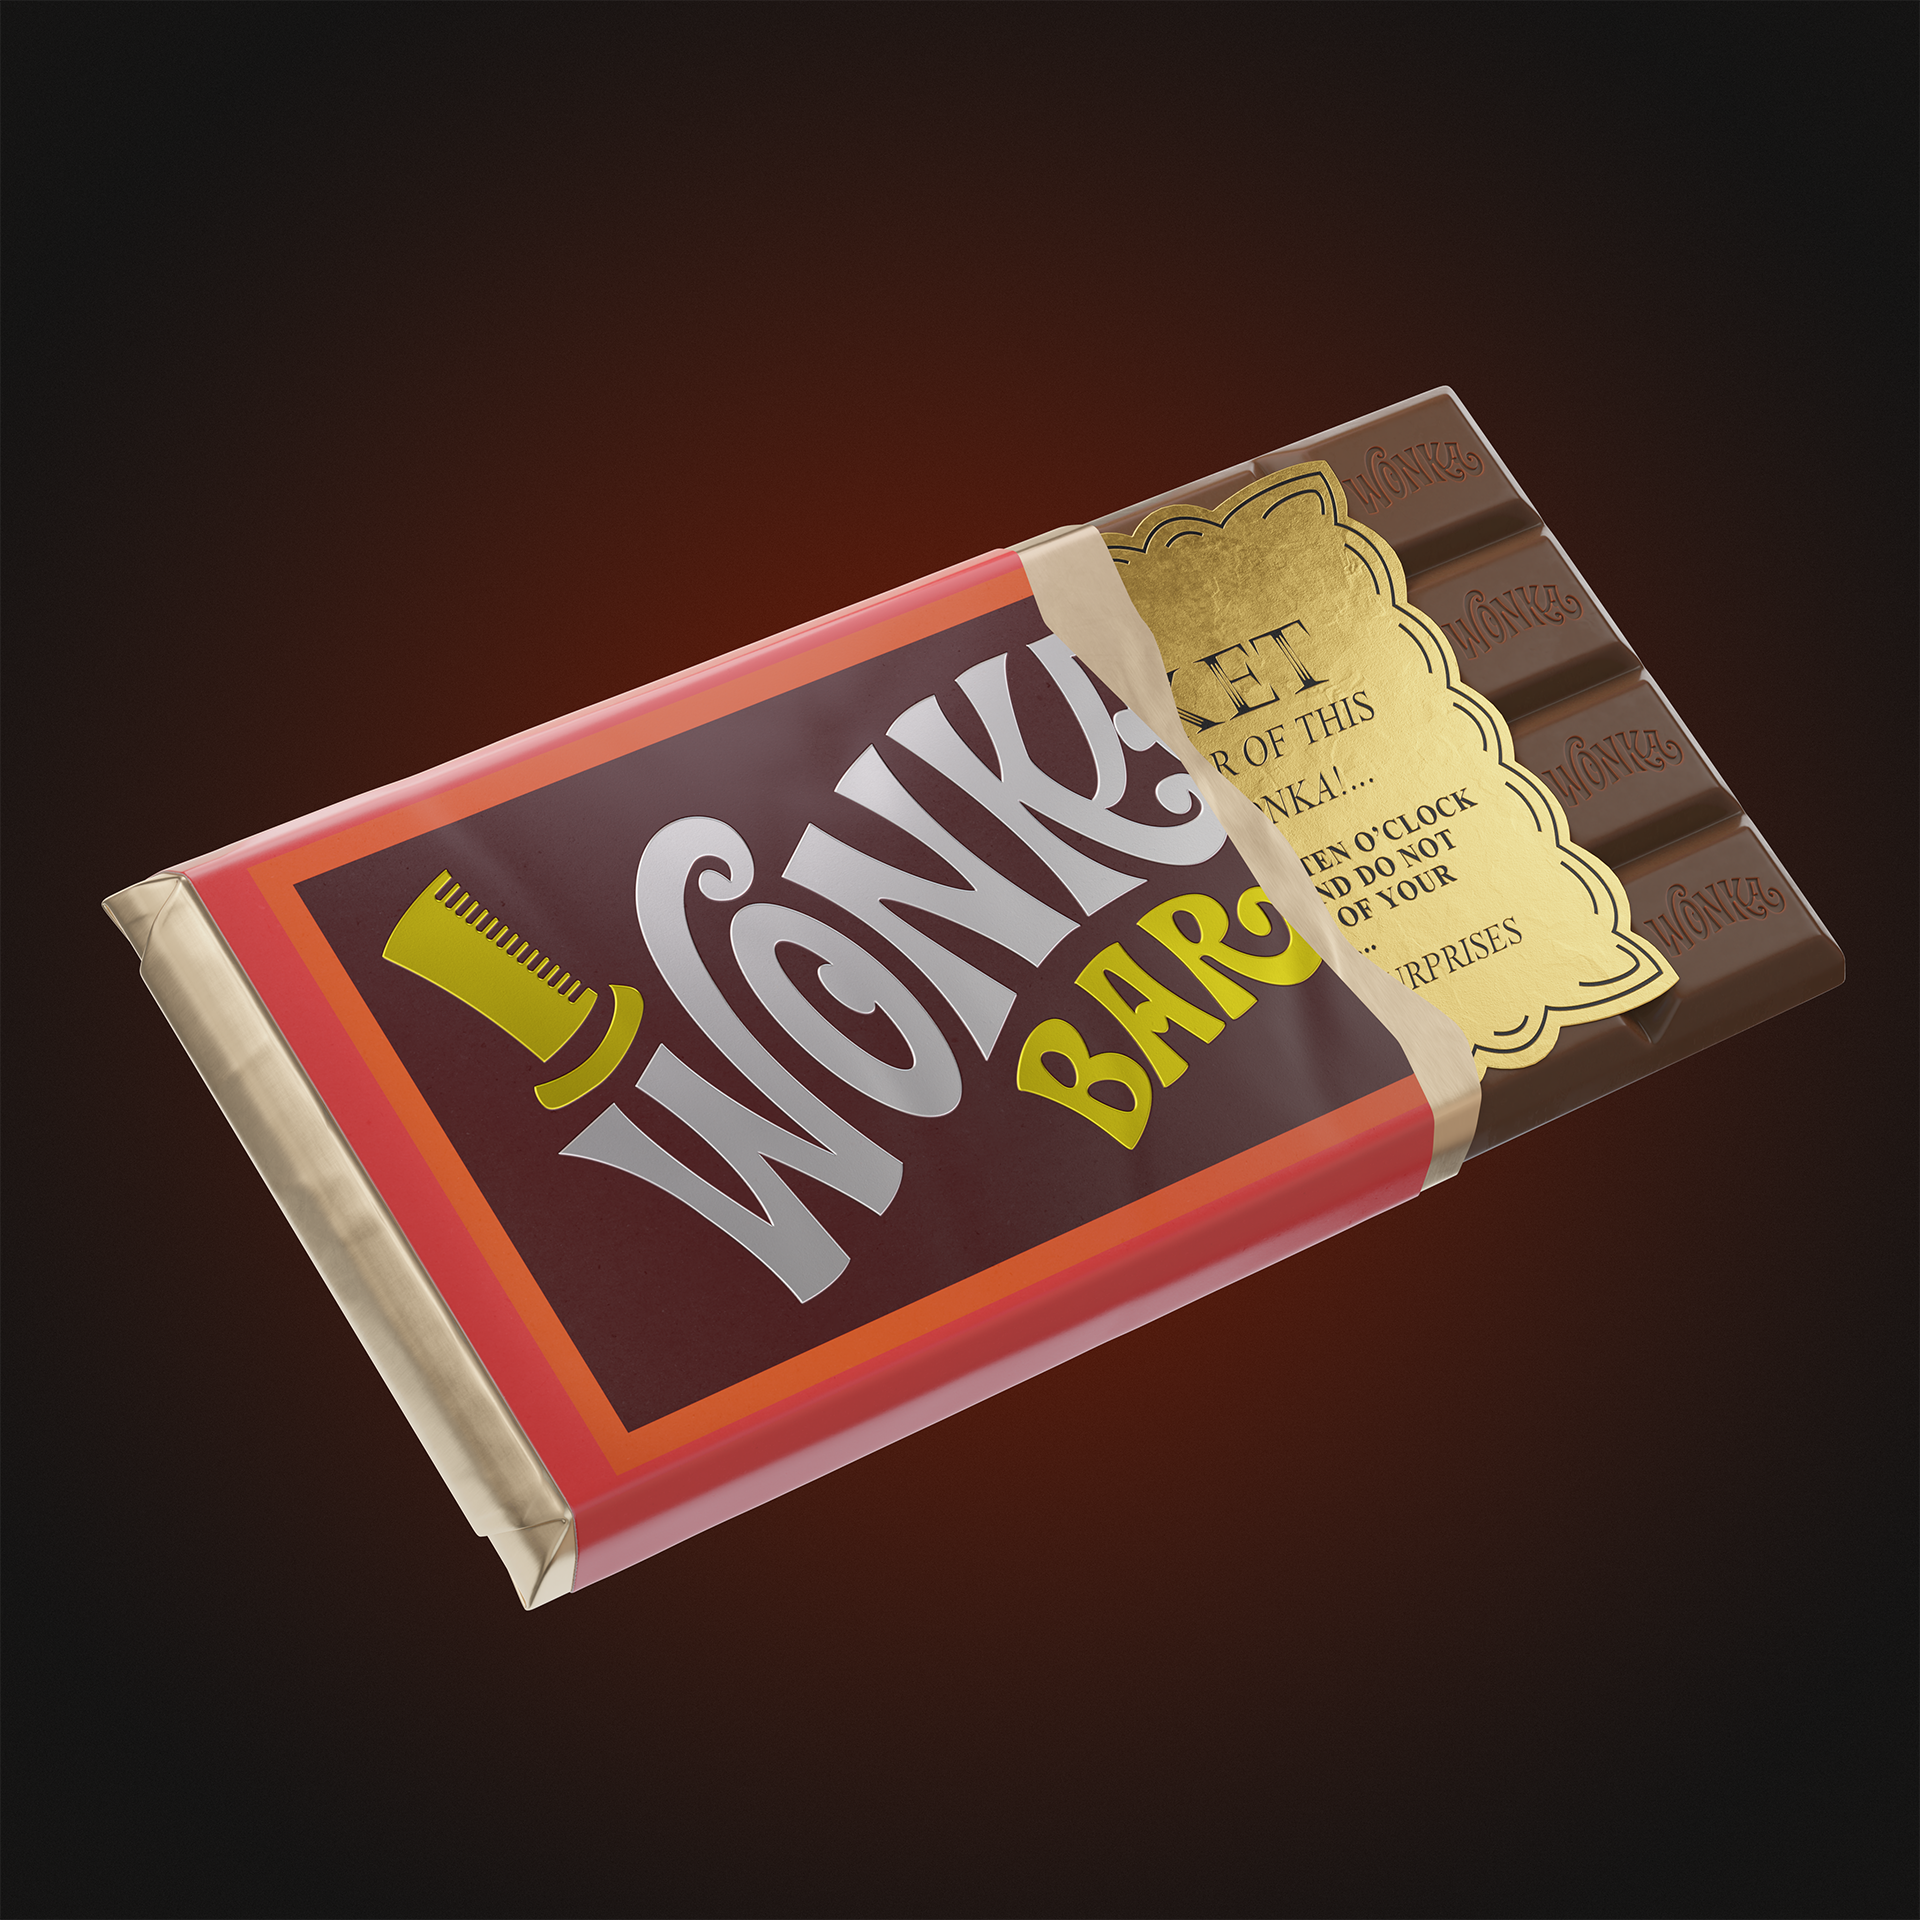 Wonka chocolate bar - Finished Projects - Blender Artists Community